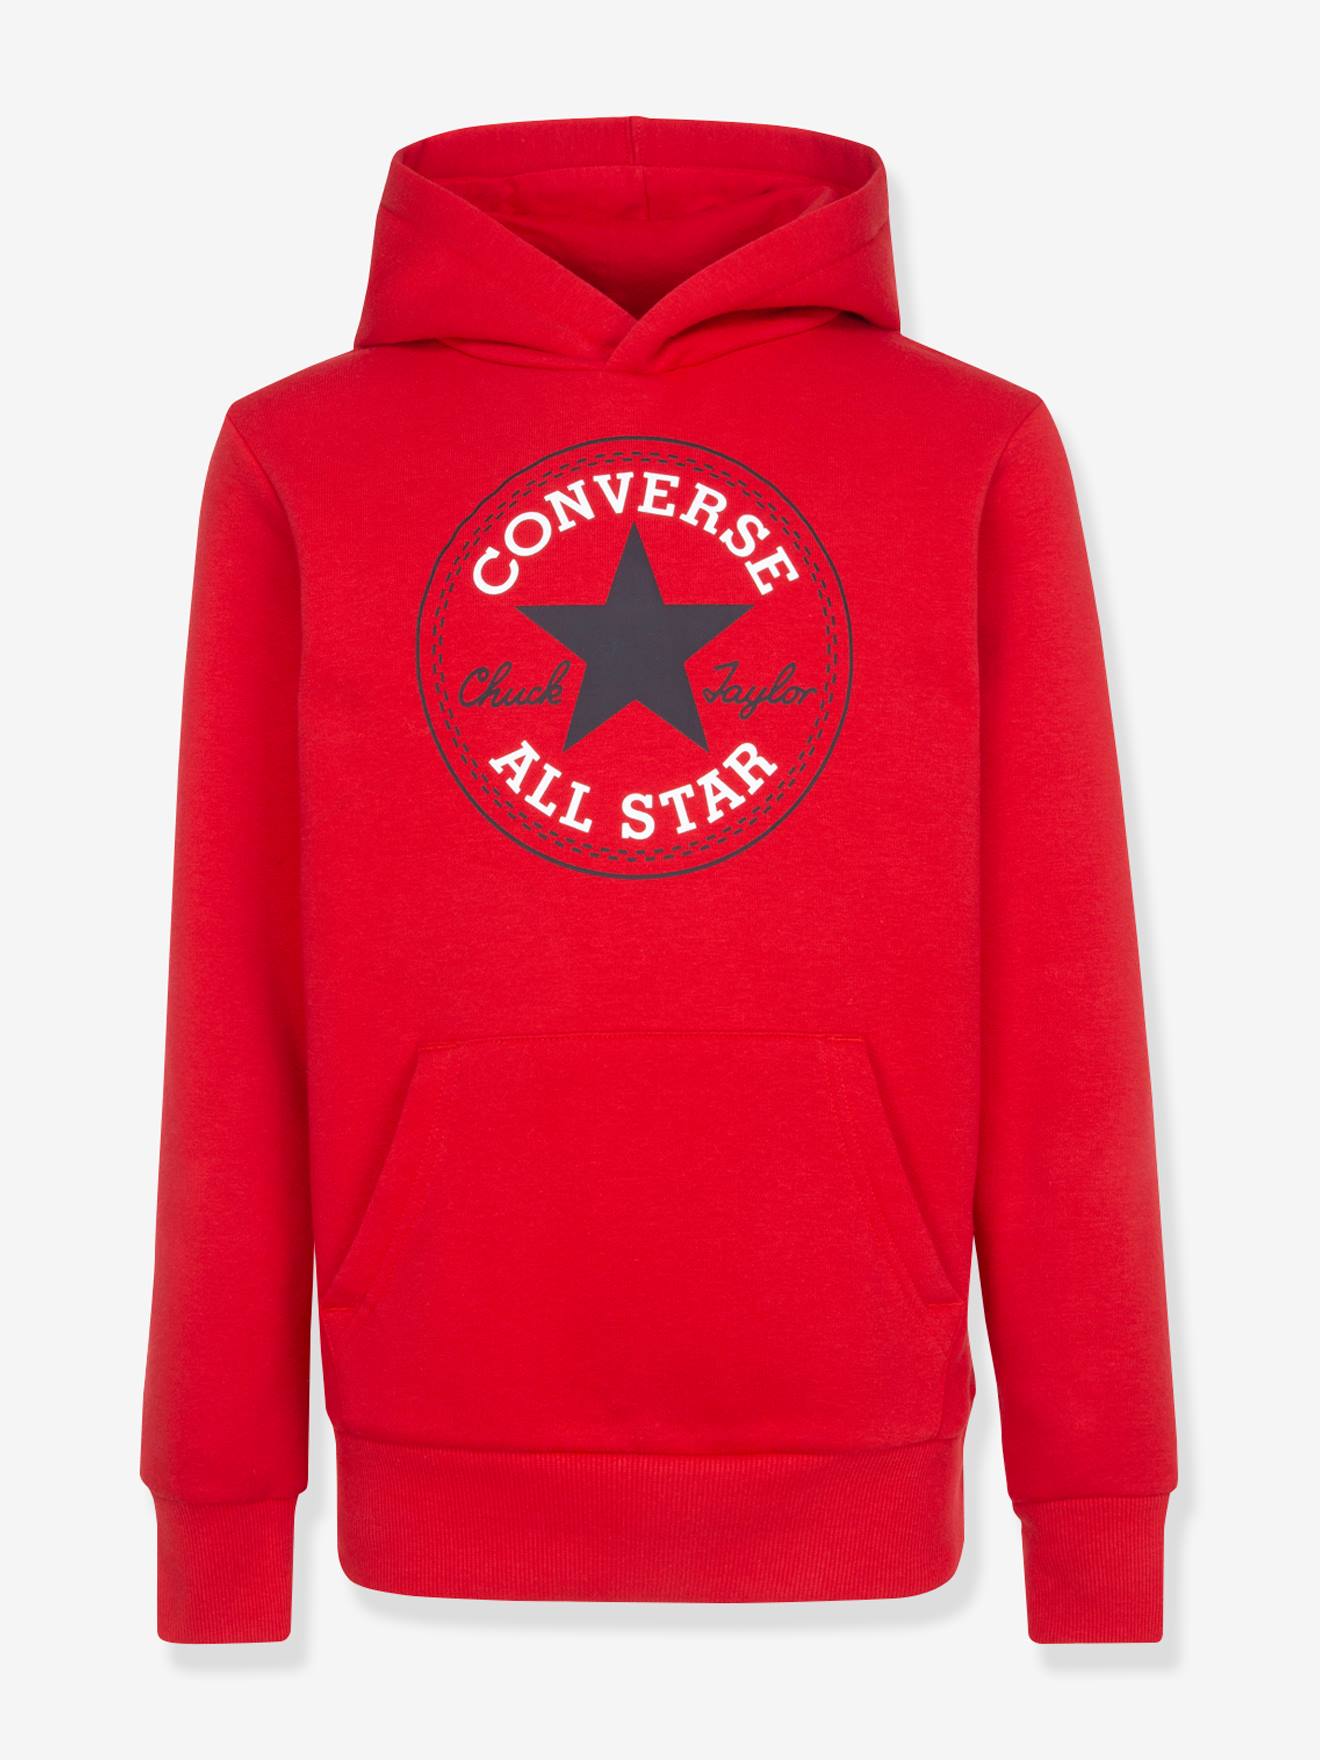 Sweatshirt CONVERSE Boys red, -